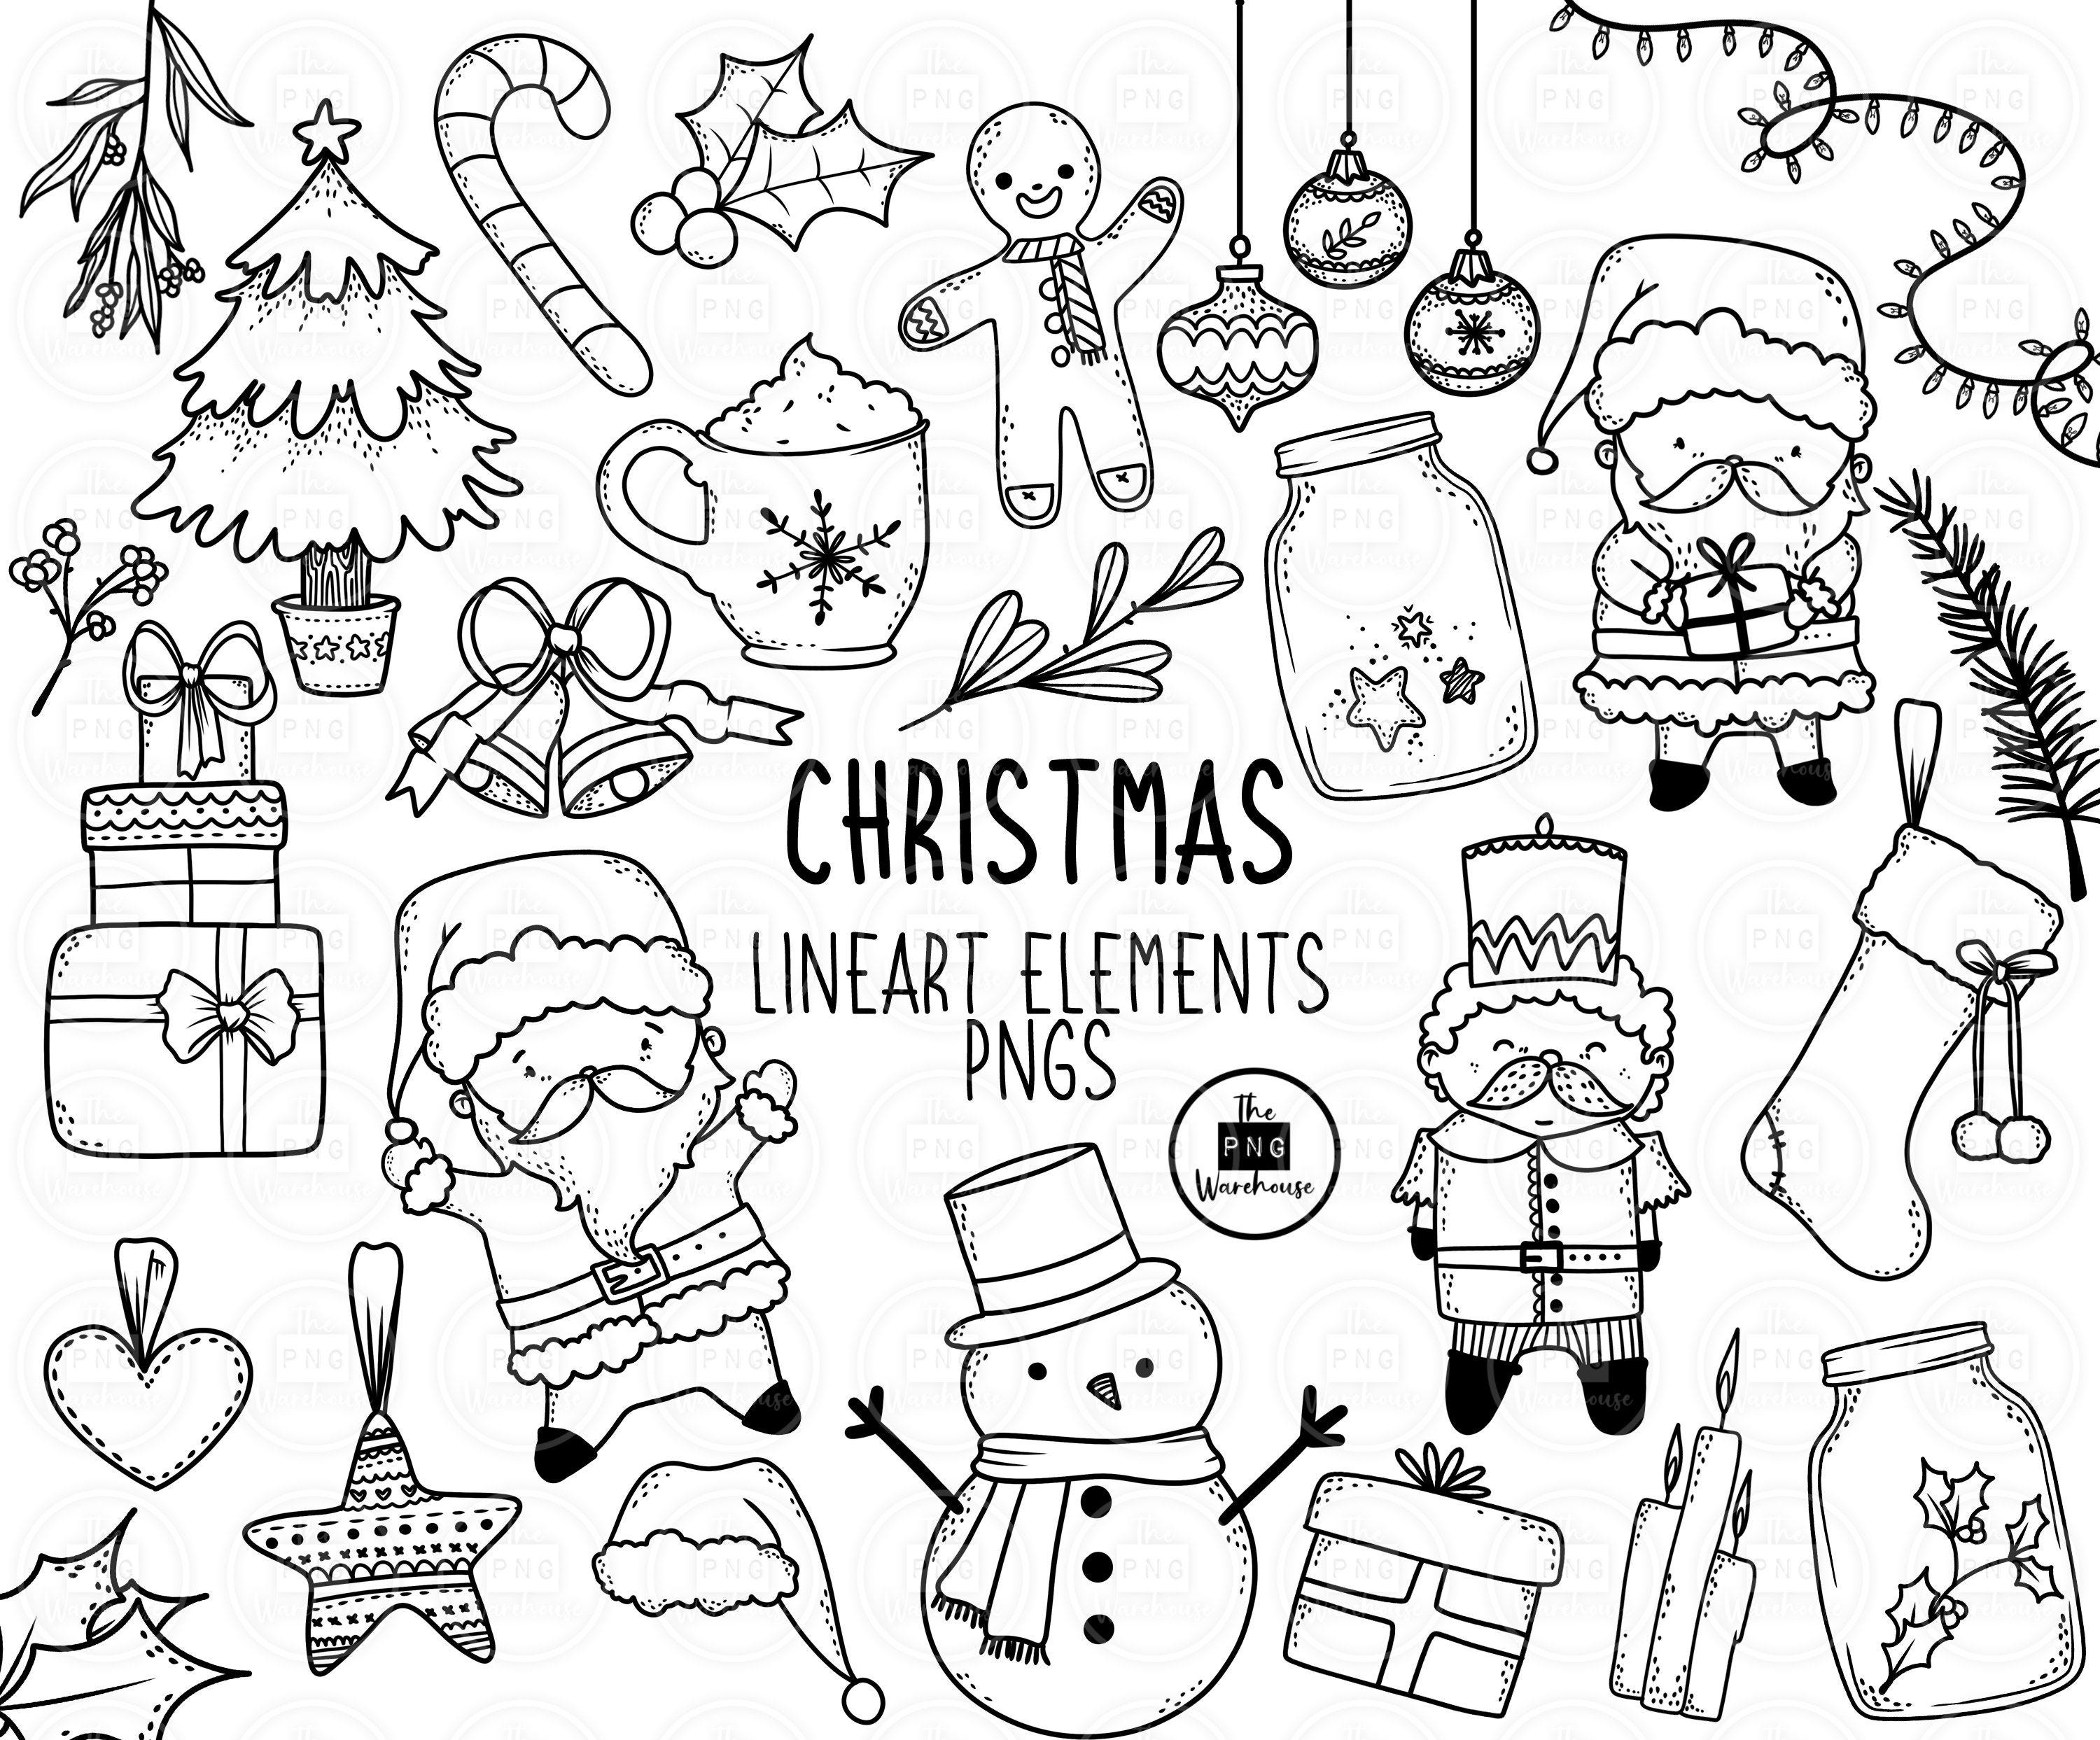 CHRISTMAS Lineart Elements - 29 png clip art designs - instant download 300 dpi line art non filled hand drawn elements doodles black xmas